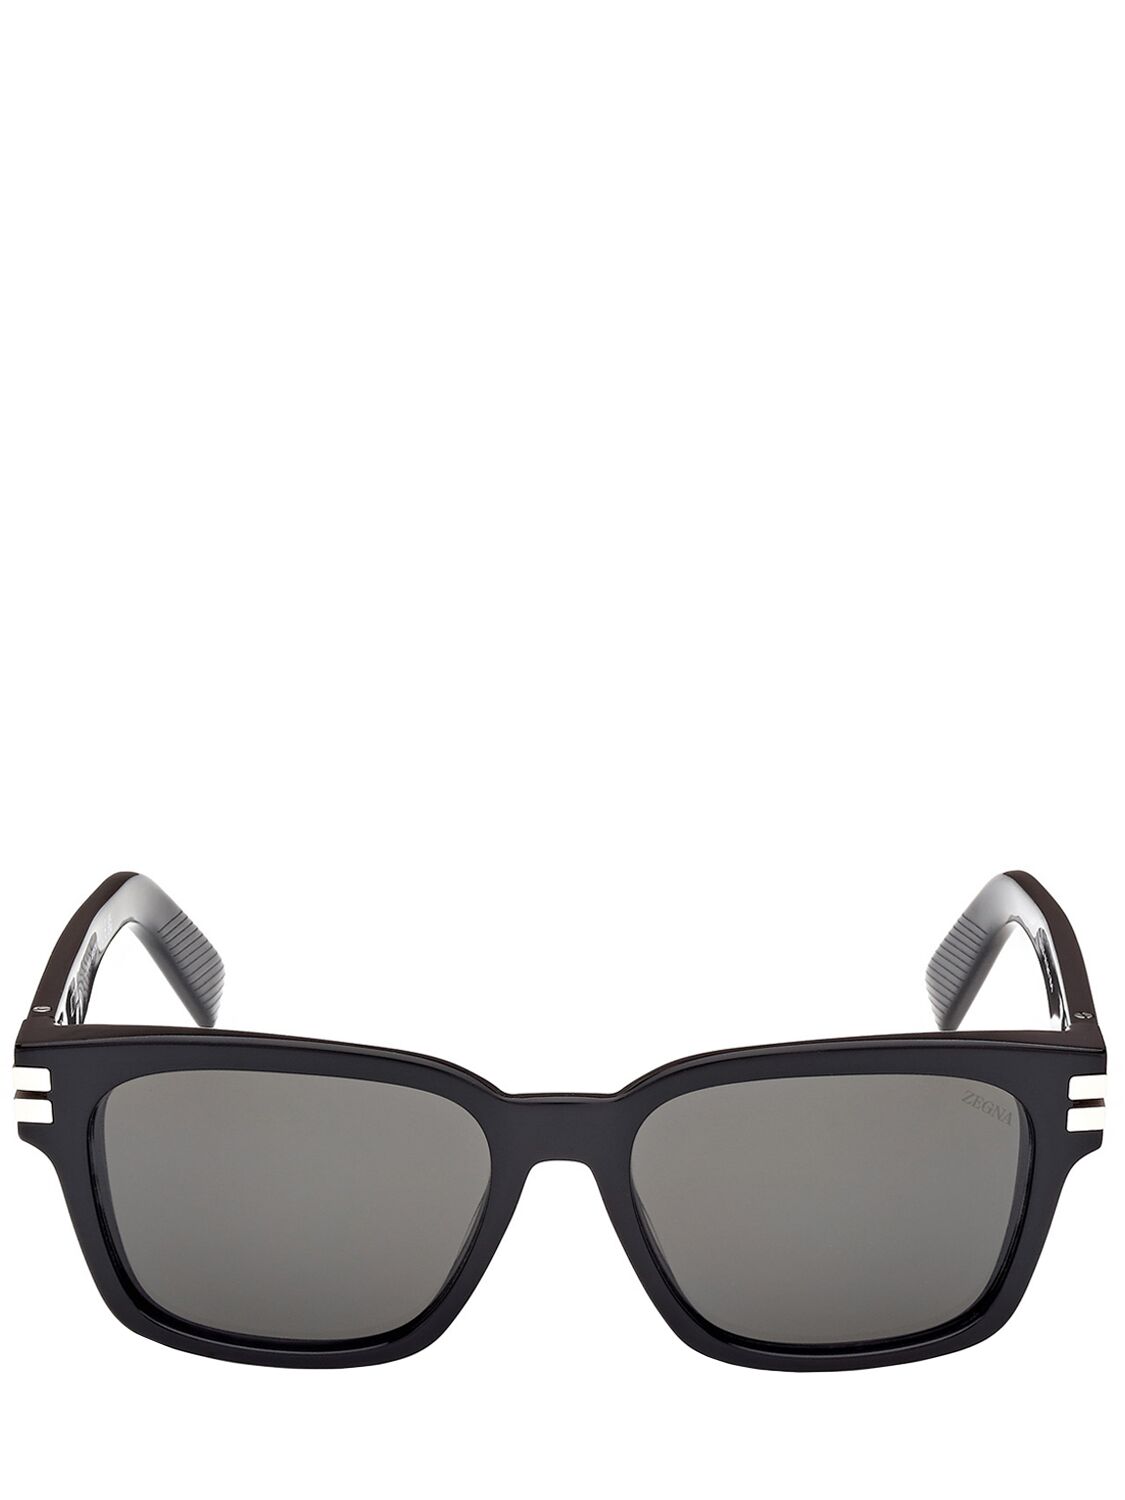 Zegna Squared Sunglasses In Black,grey